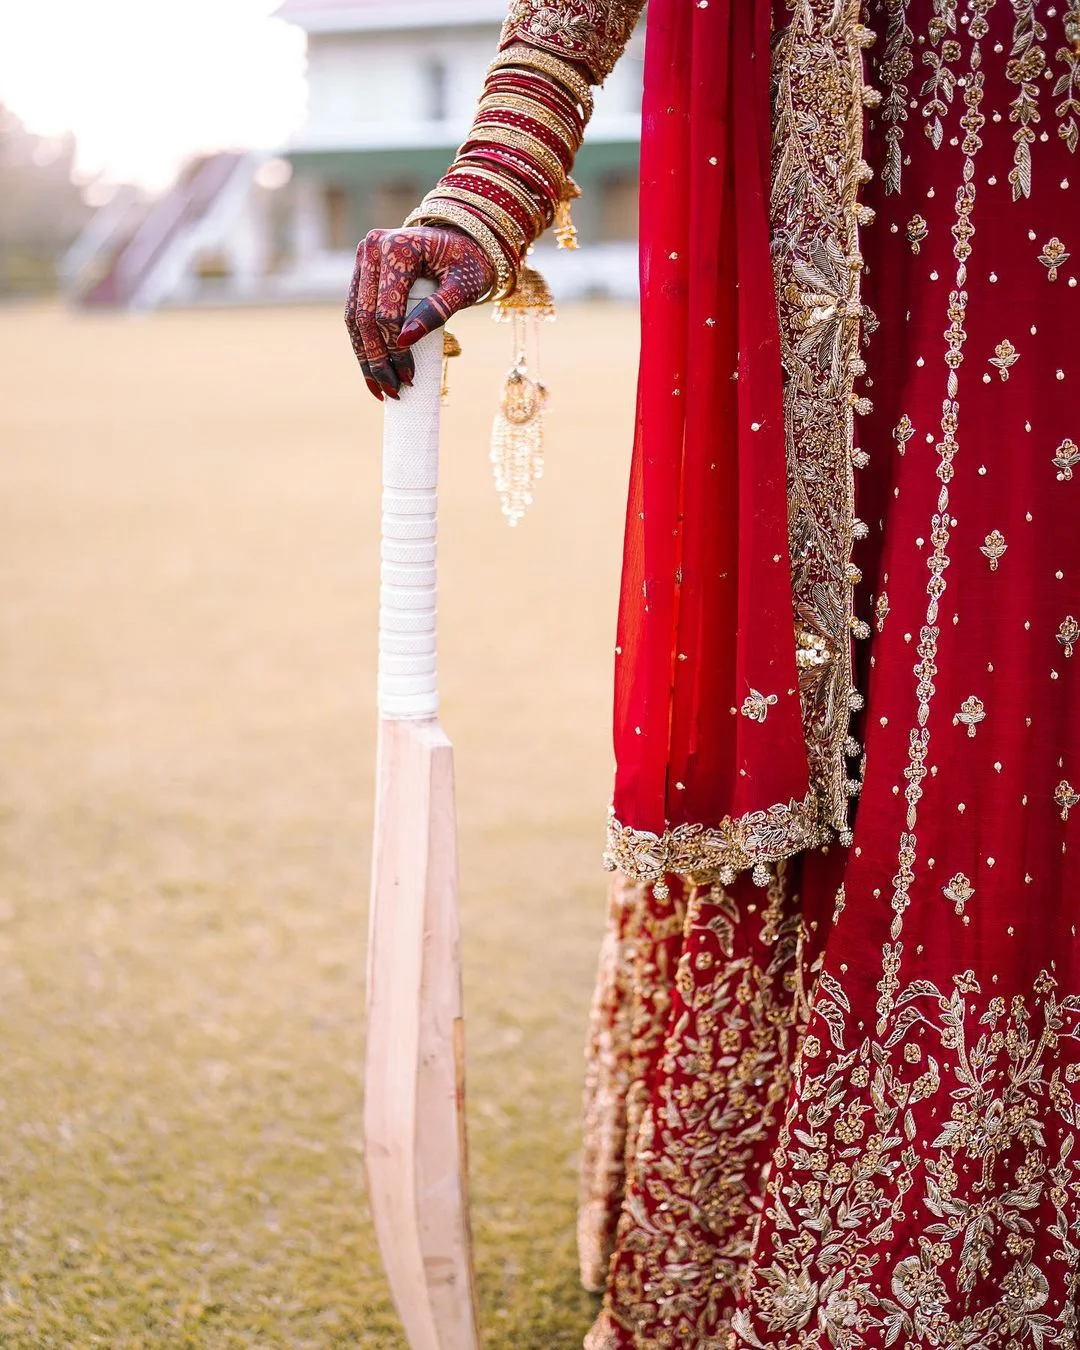 Cricketer Kainat Imtiaz Cricket Themed Wedding Shoot